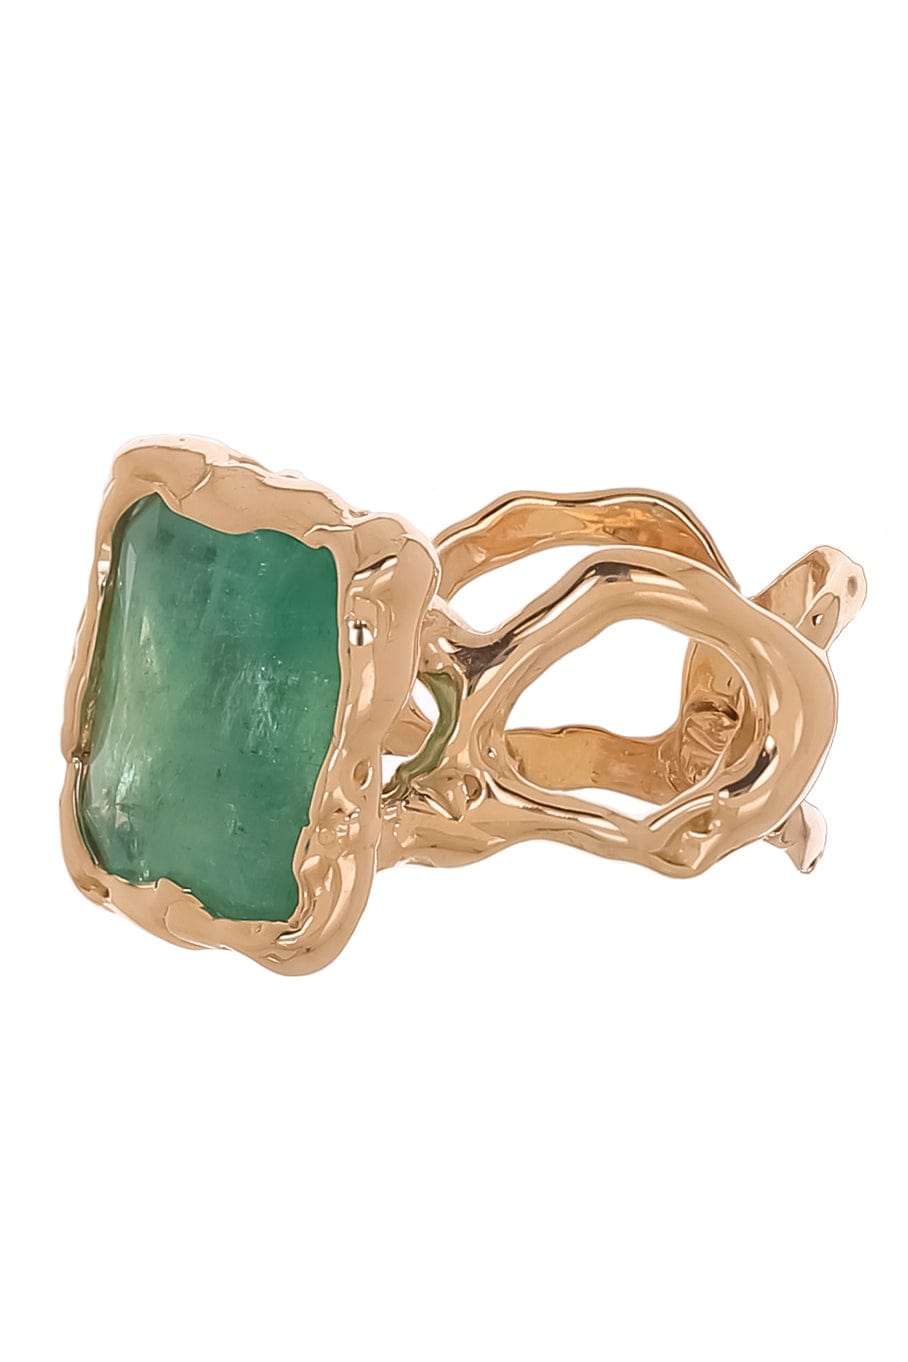 Emerald Reticolo Ring JEWELRYFINE JEWELRING LUCIFER VIR HONESTUS   